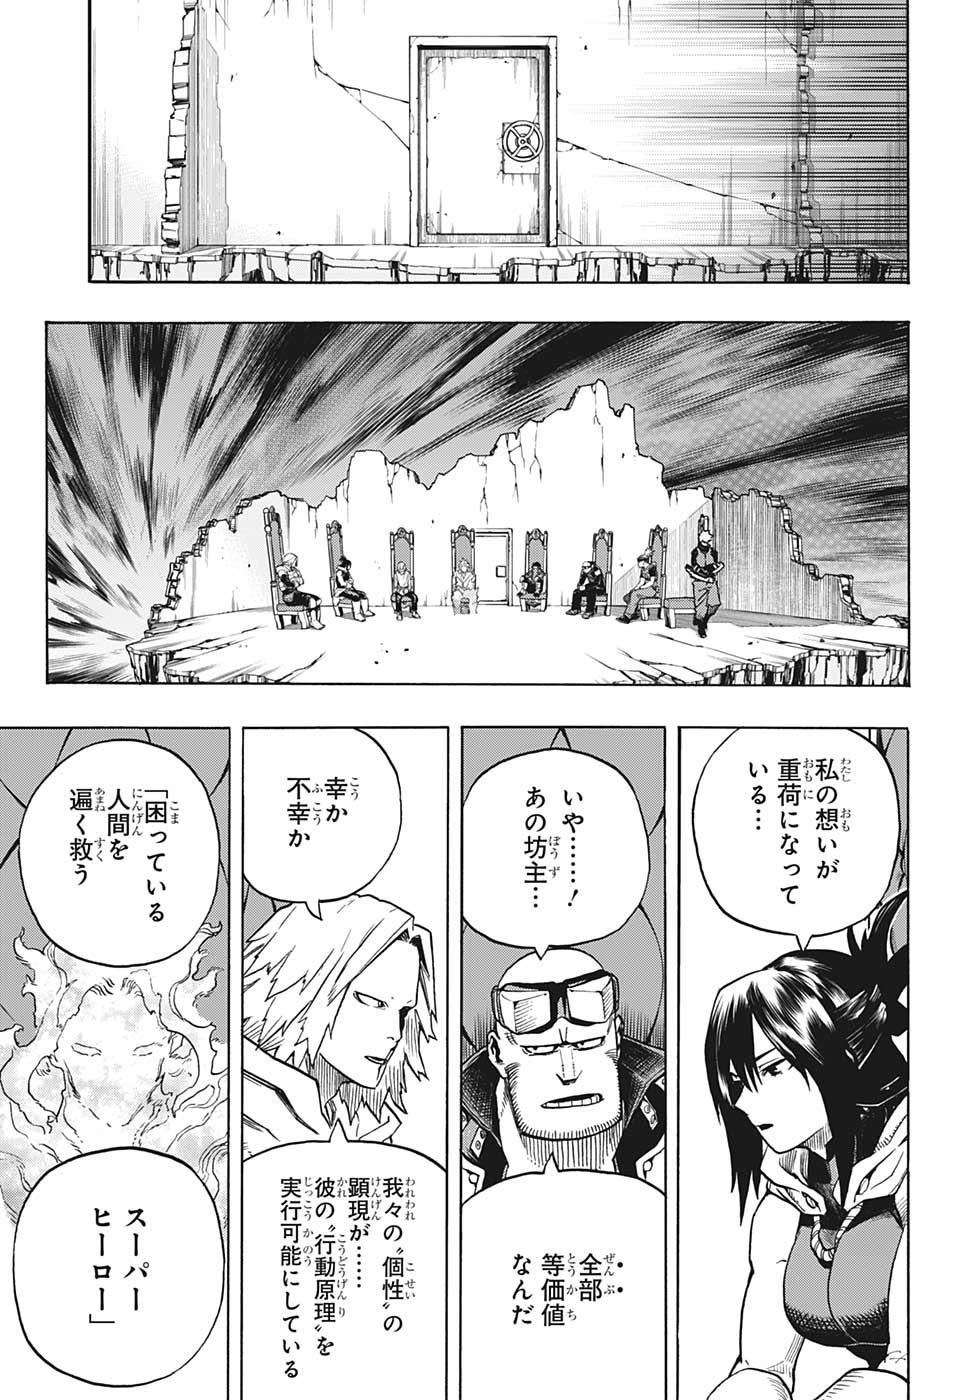 Boku no Hero Academia - Chapter 318 - Page 3